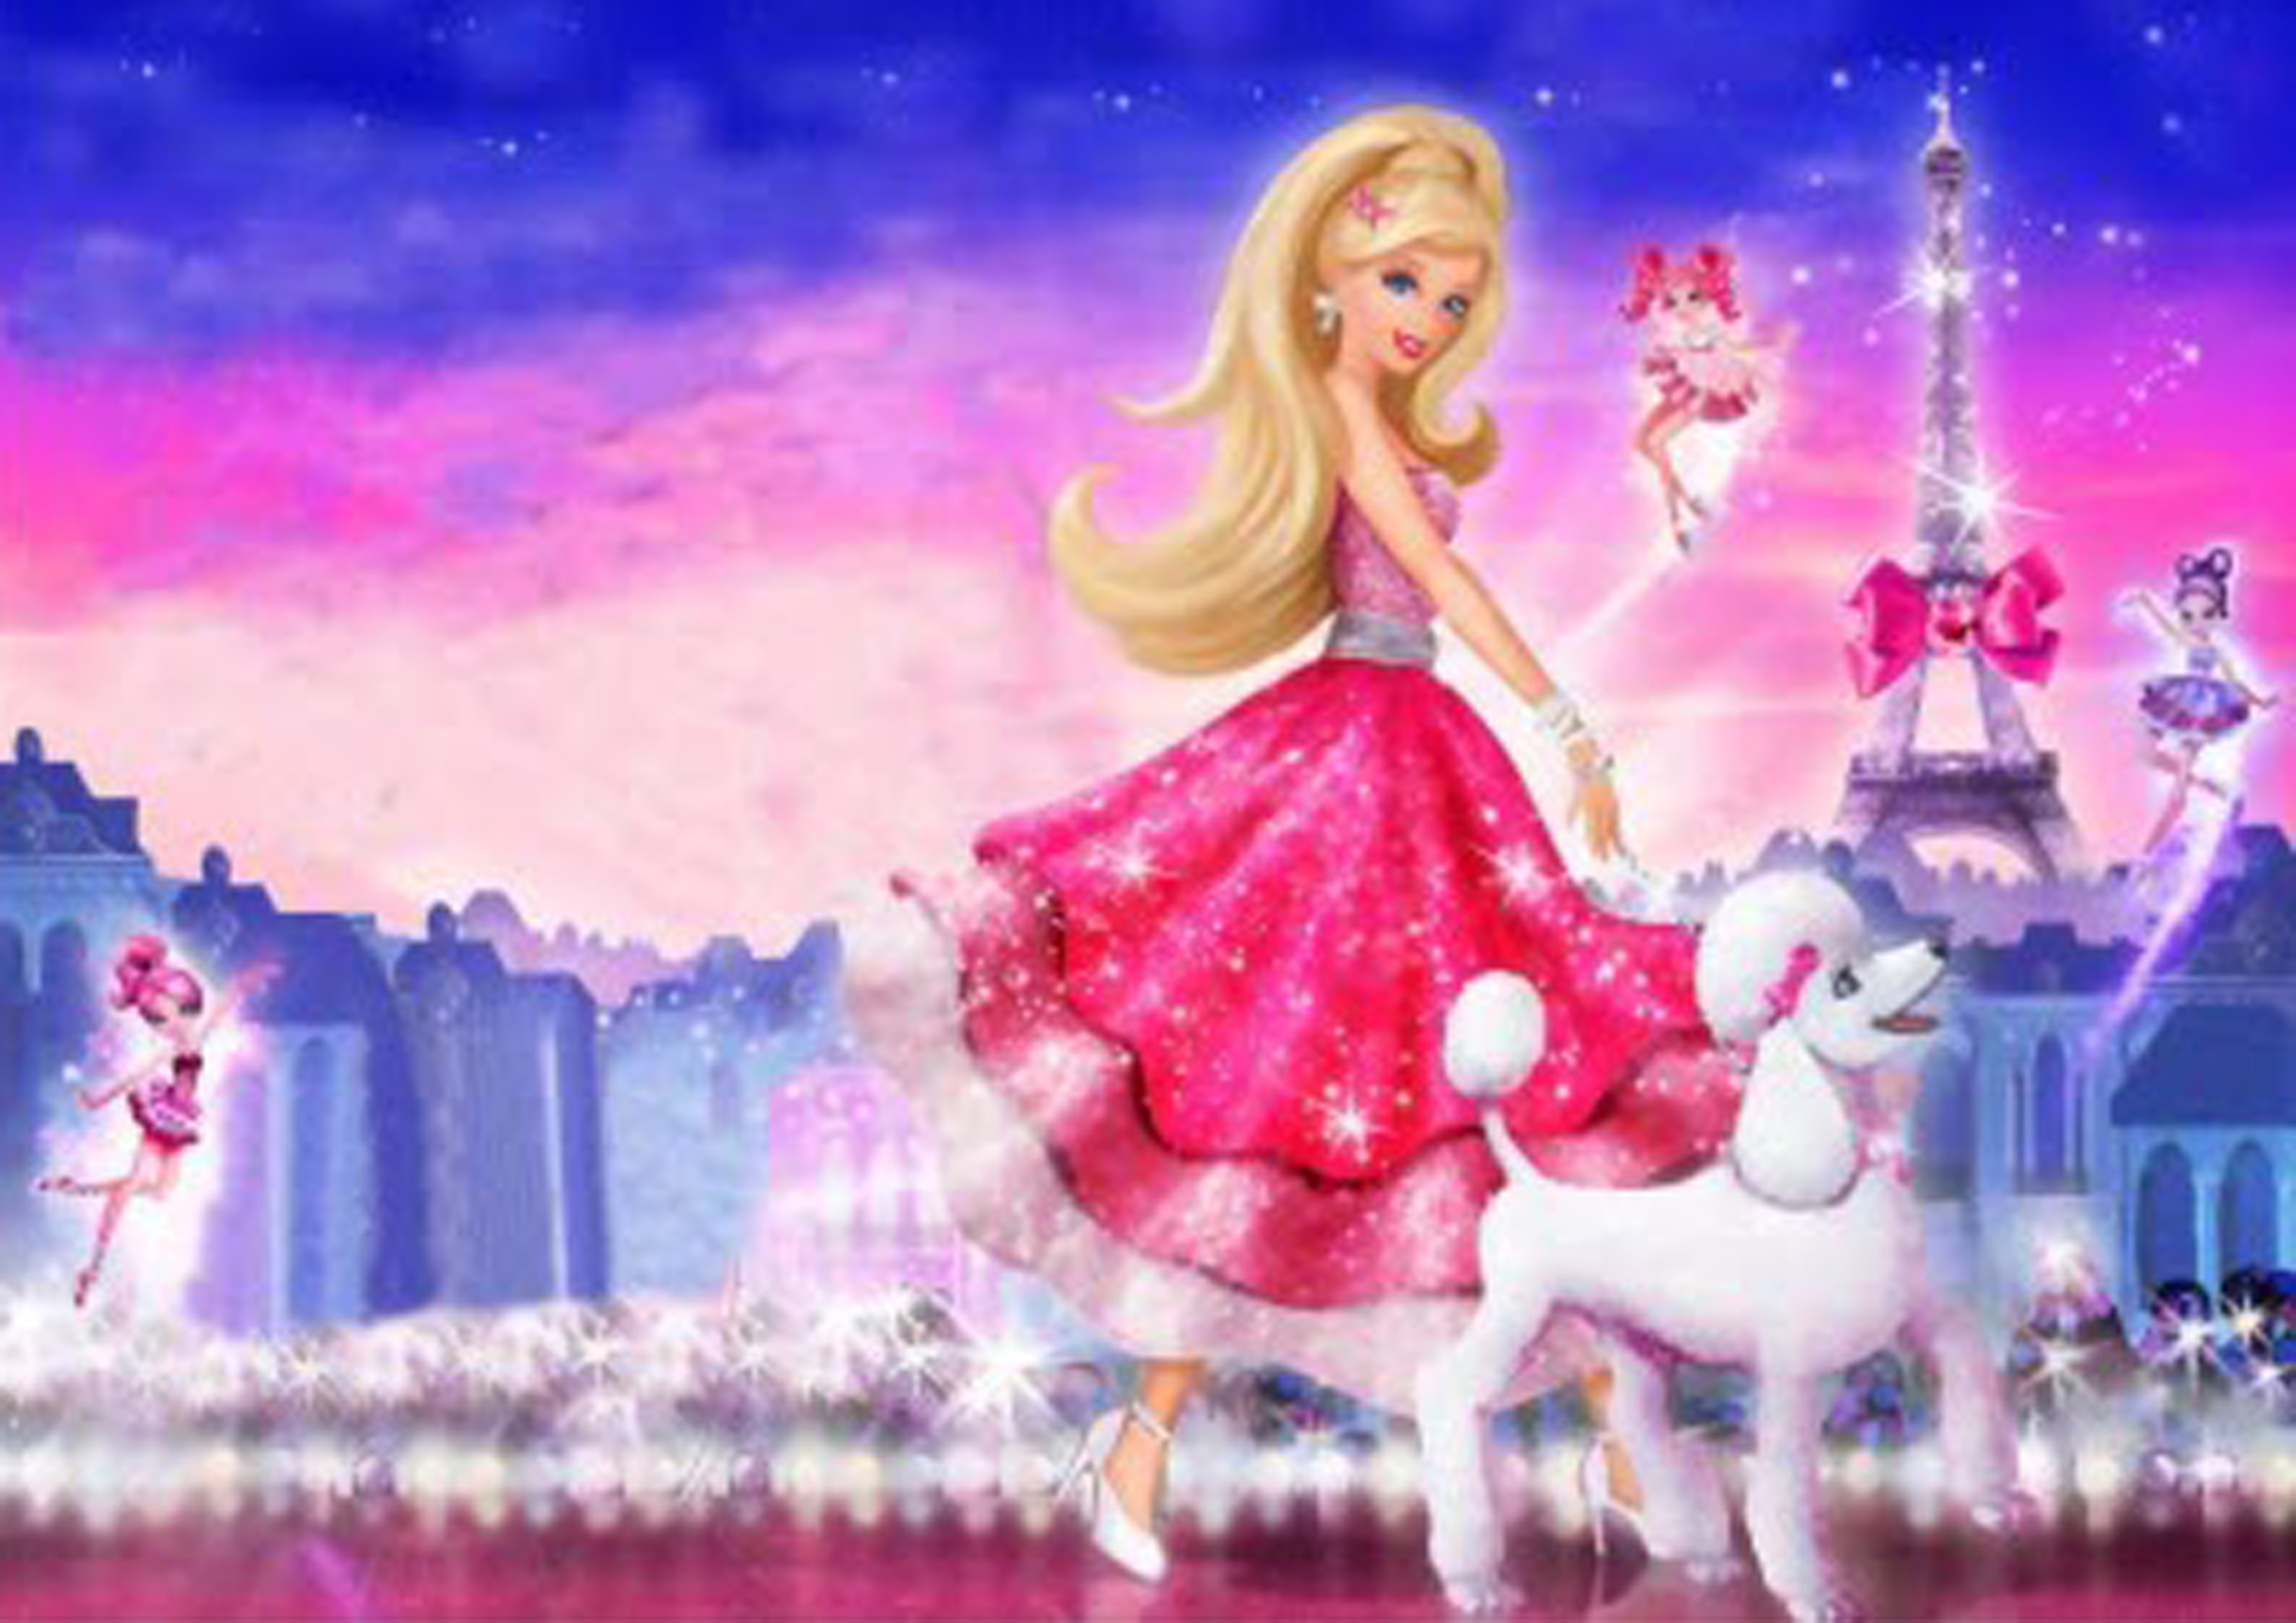  Wallpaper Coloring Pages Cartoon Cake Princess Logo 2013 Barbie Doll